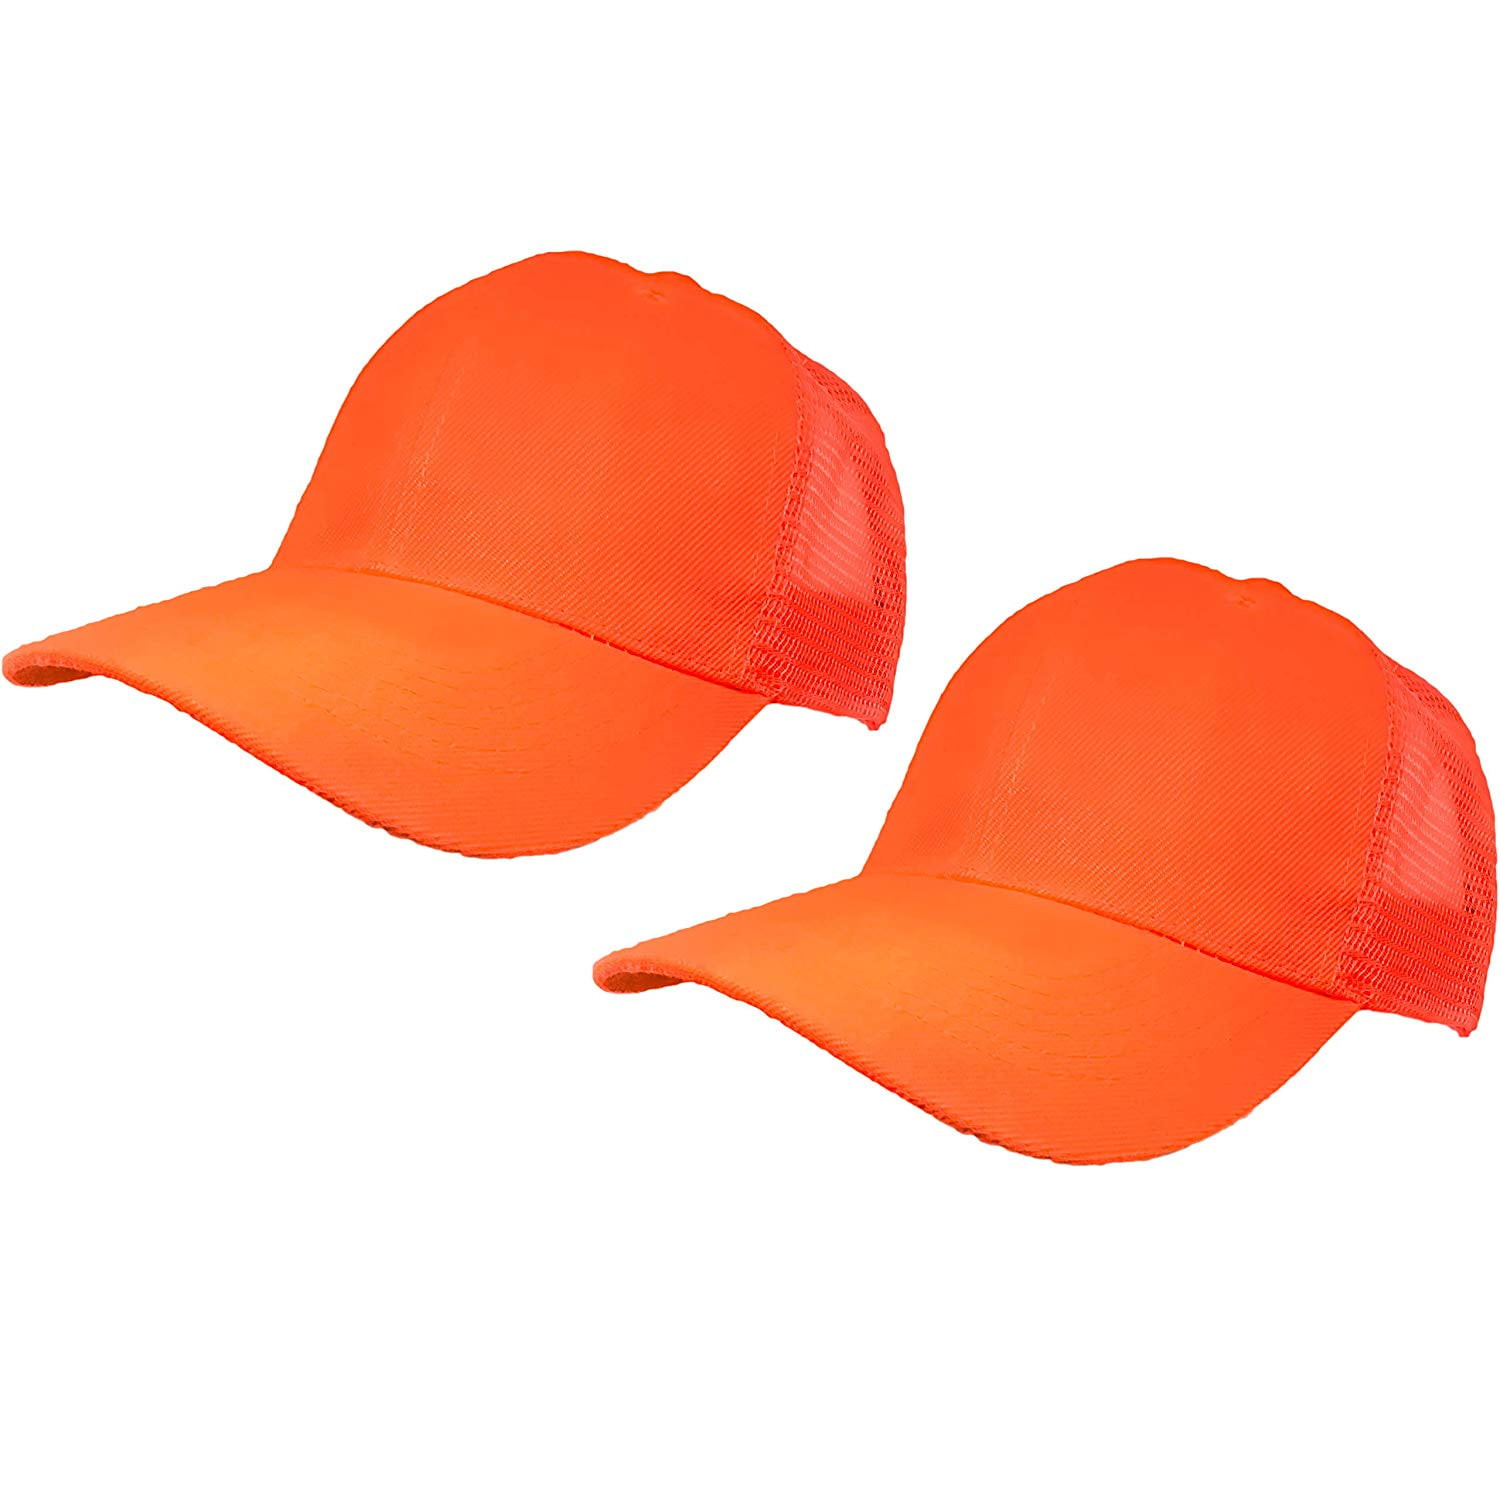 Black Duck Brand Bright Orange Cap Hat) Safety Visual Baseball (1 Mesh Hunting Adjustable Back